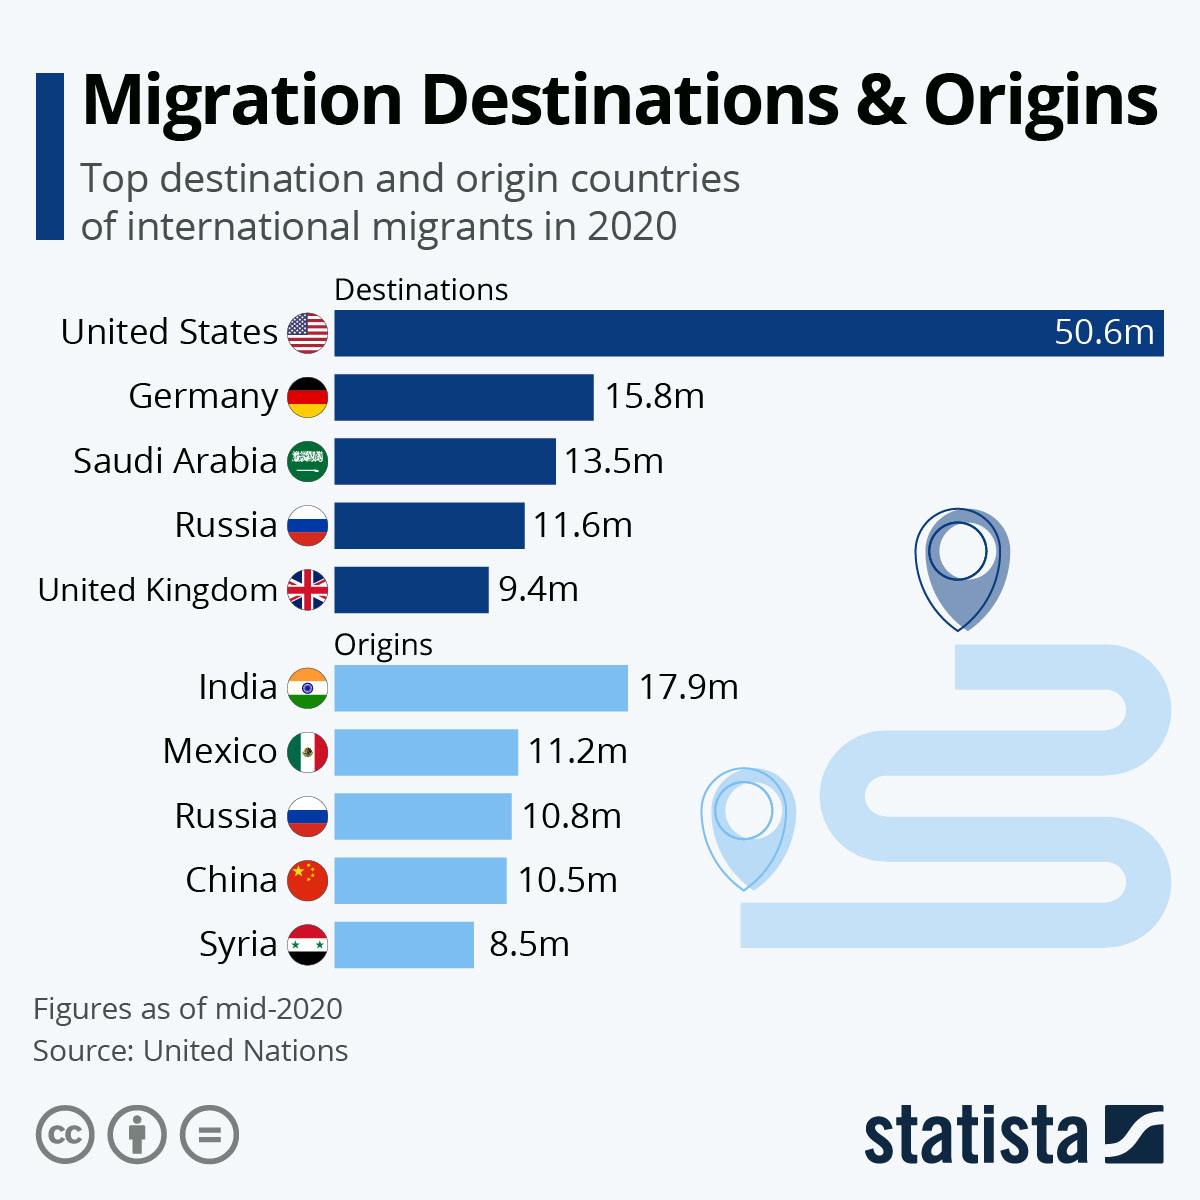 Top Destination & Origin Countries of International Migrants in 2020